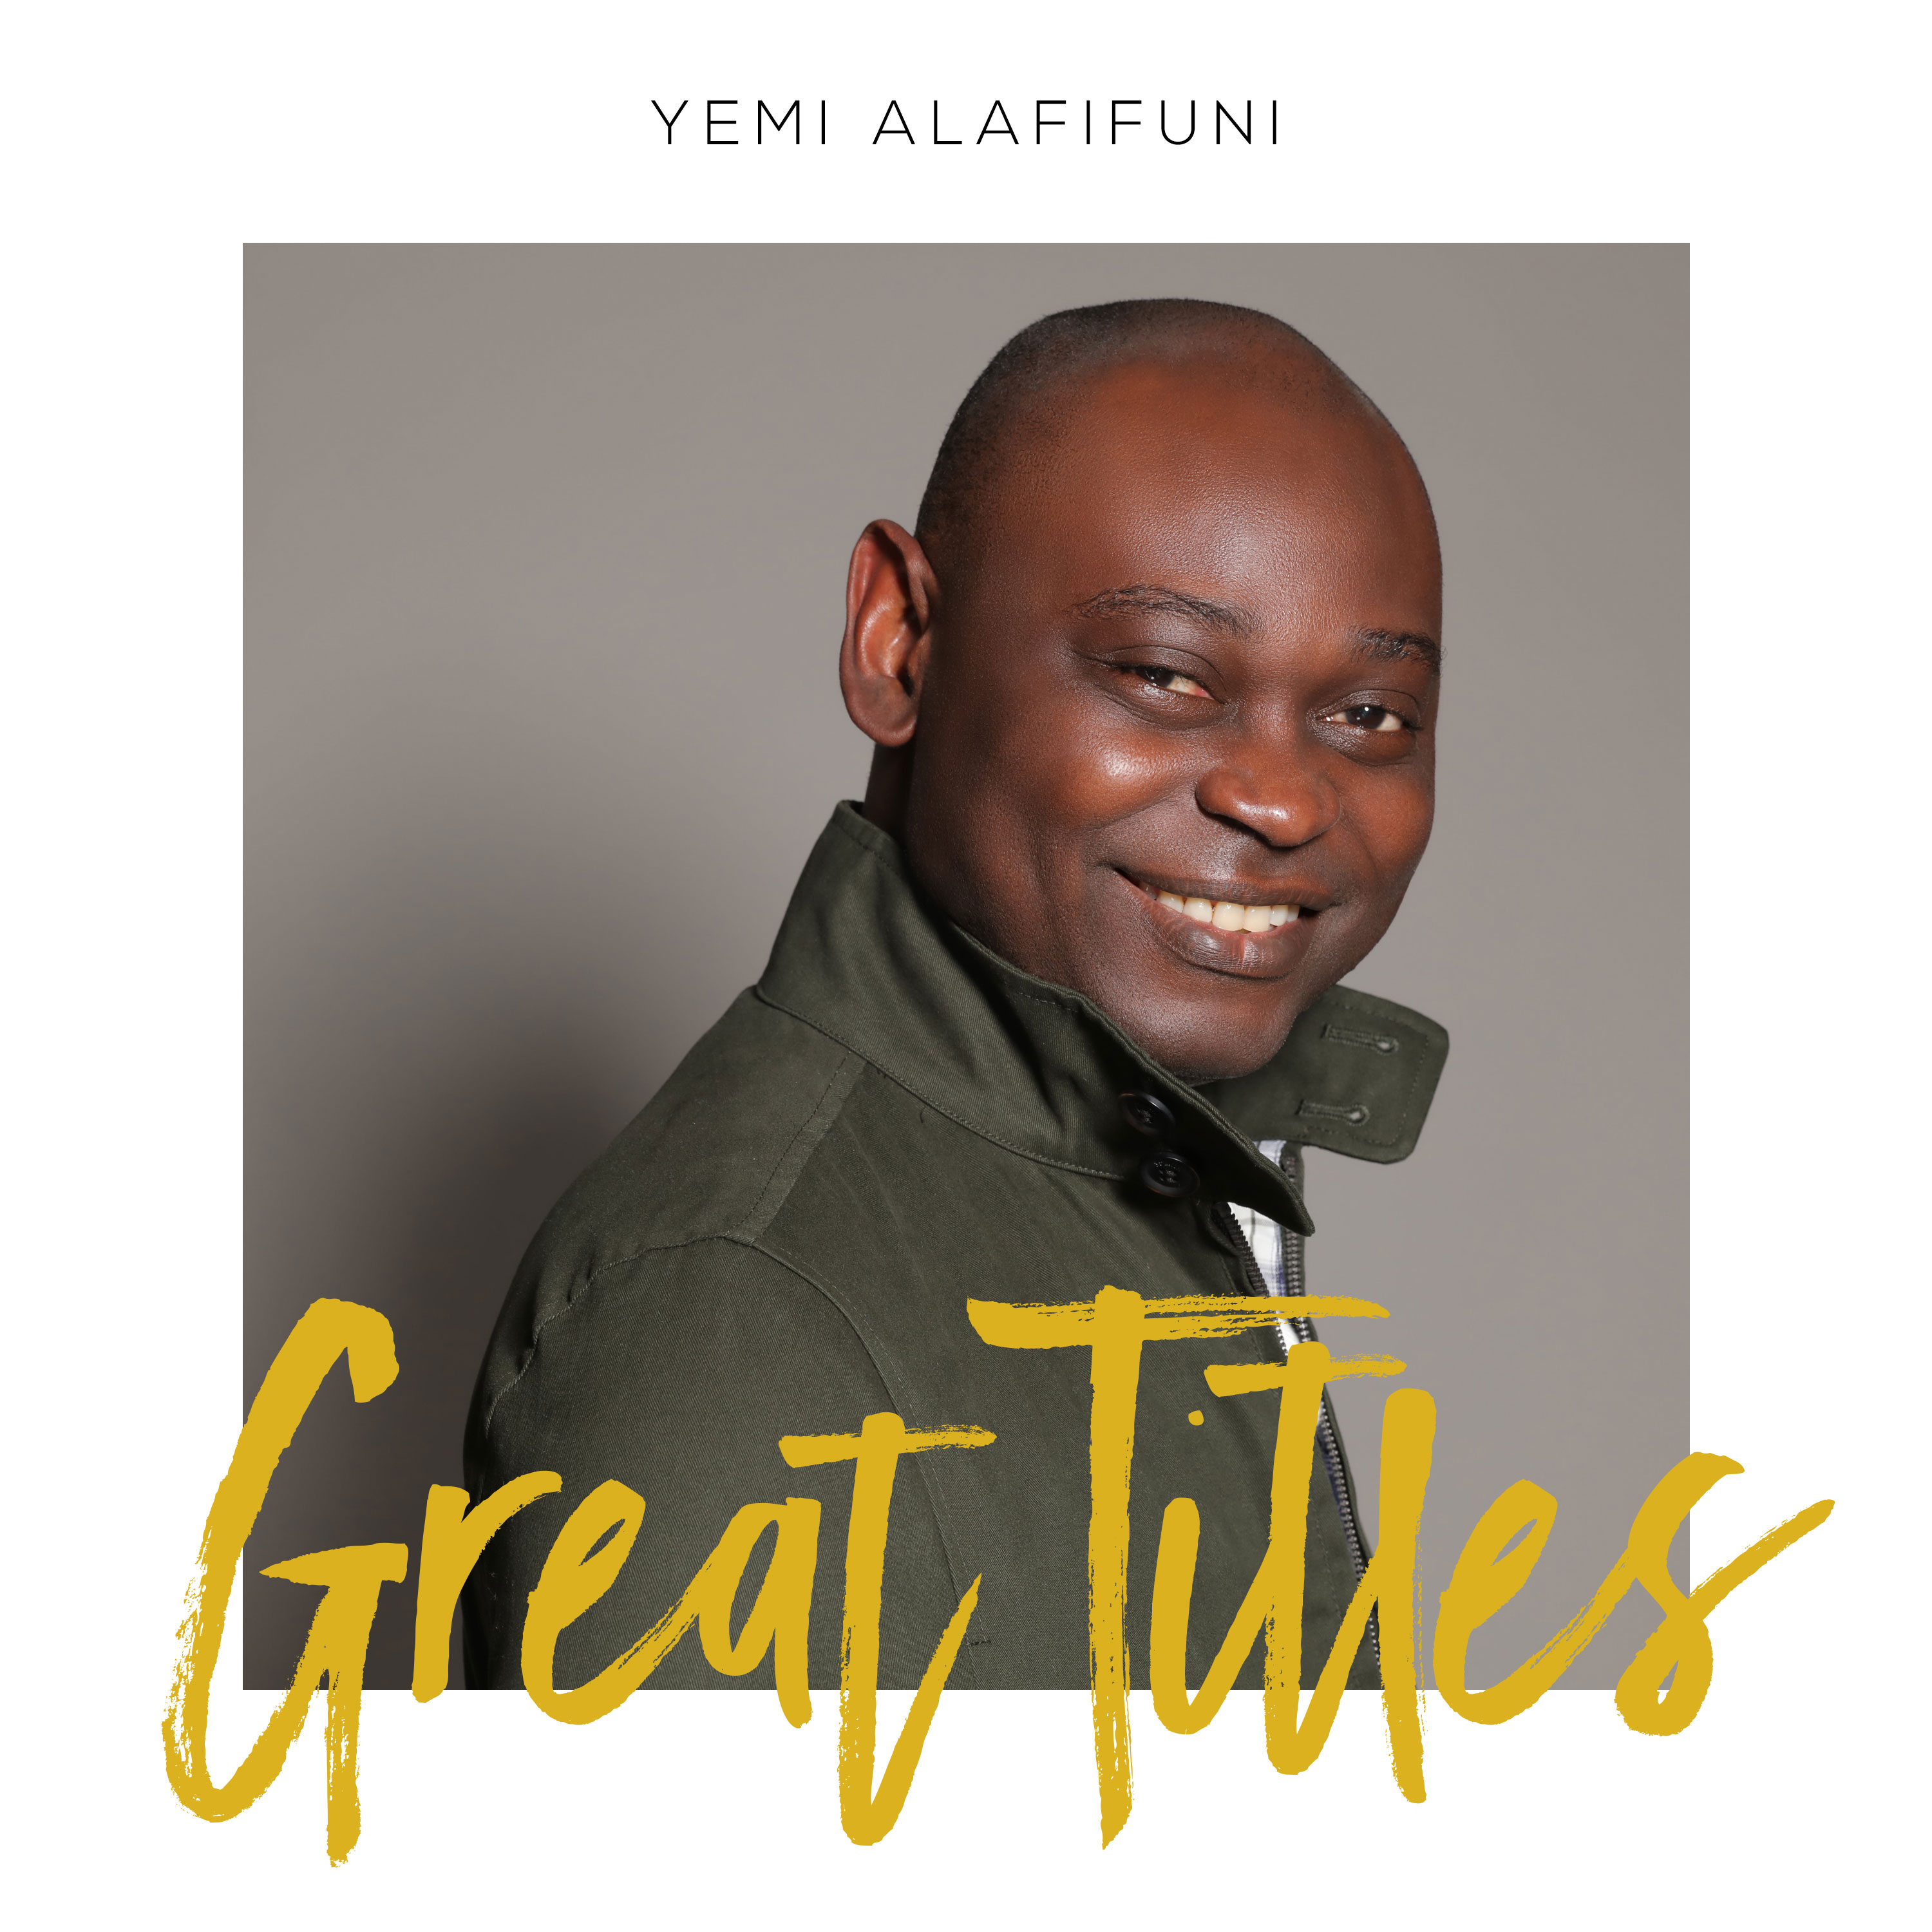 Yemi - Great Titles